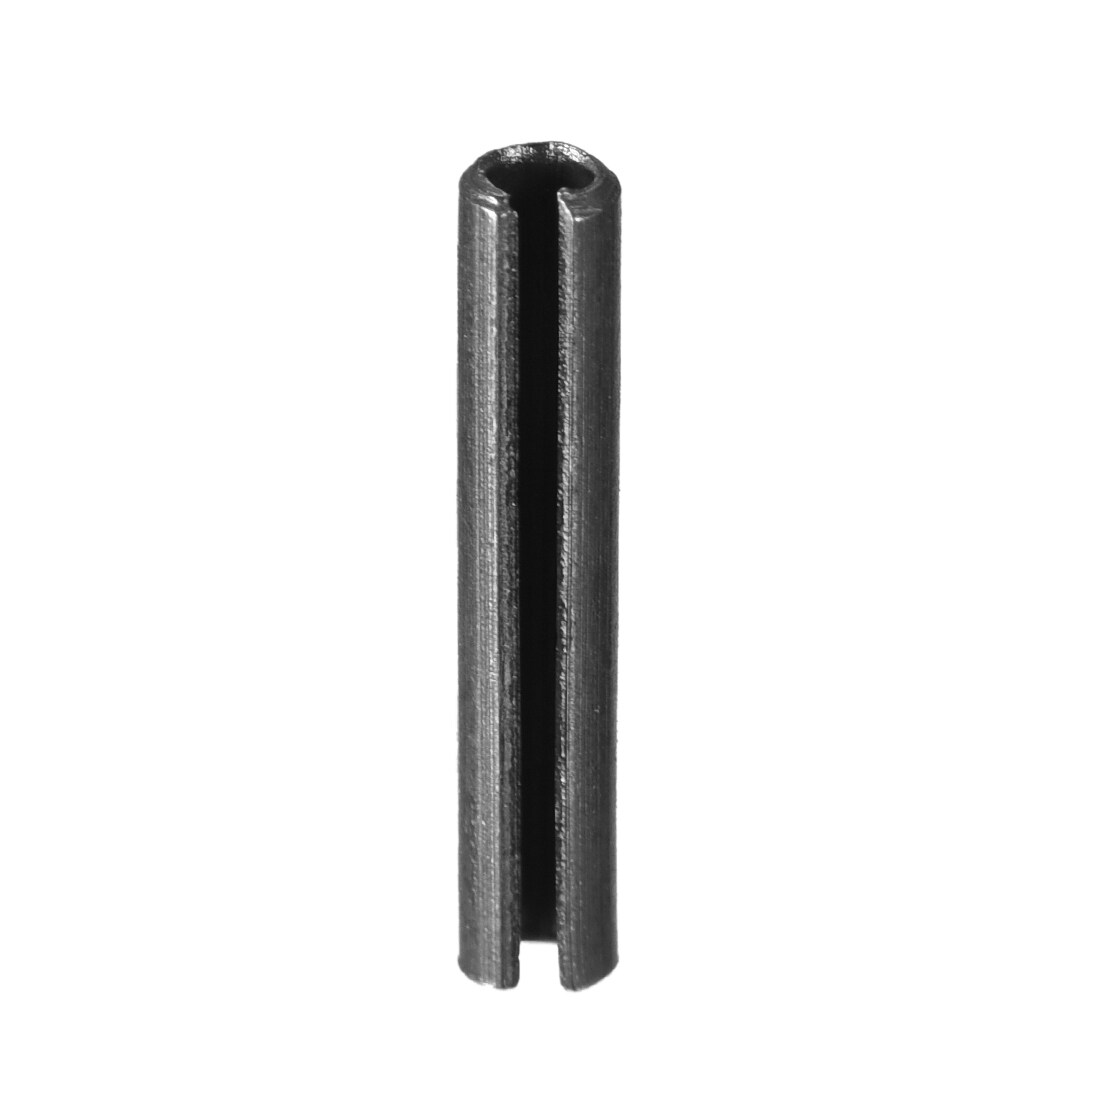 2.3x12mm Dowel Pin Carbon Steel Split Spring Roll Shelf Support Pin 20Pcs - Silver Tone